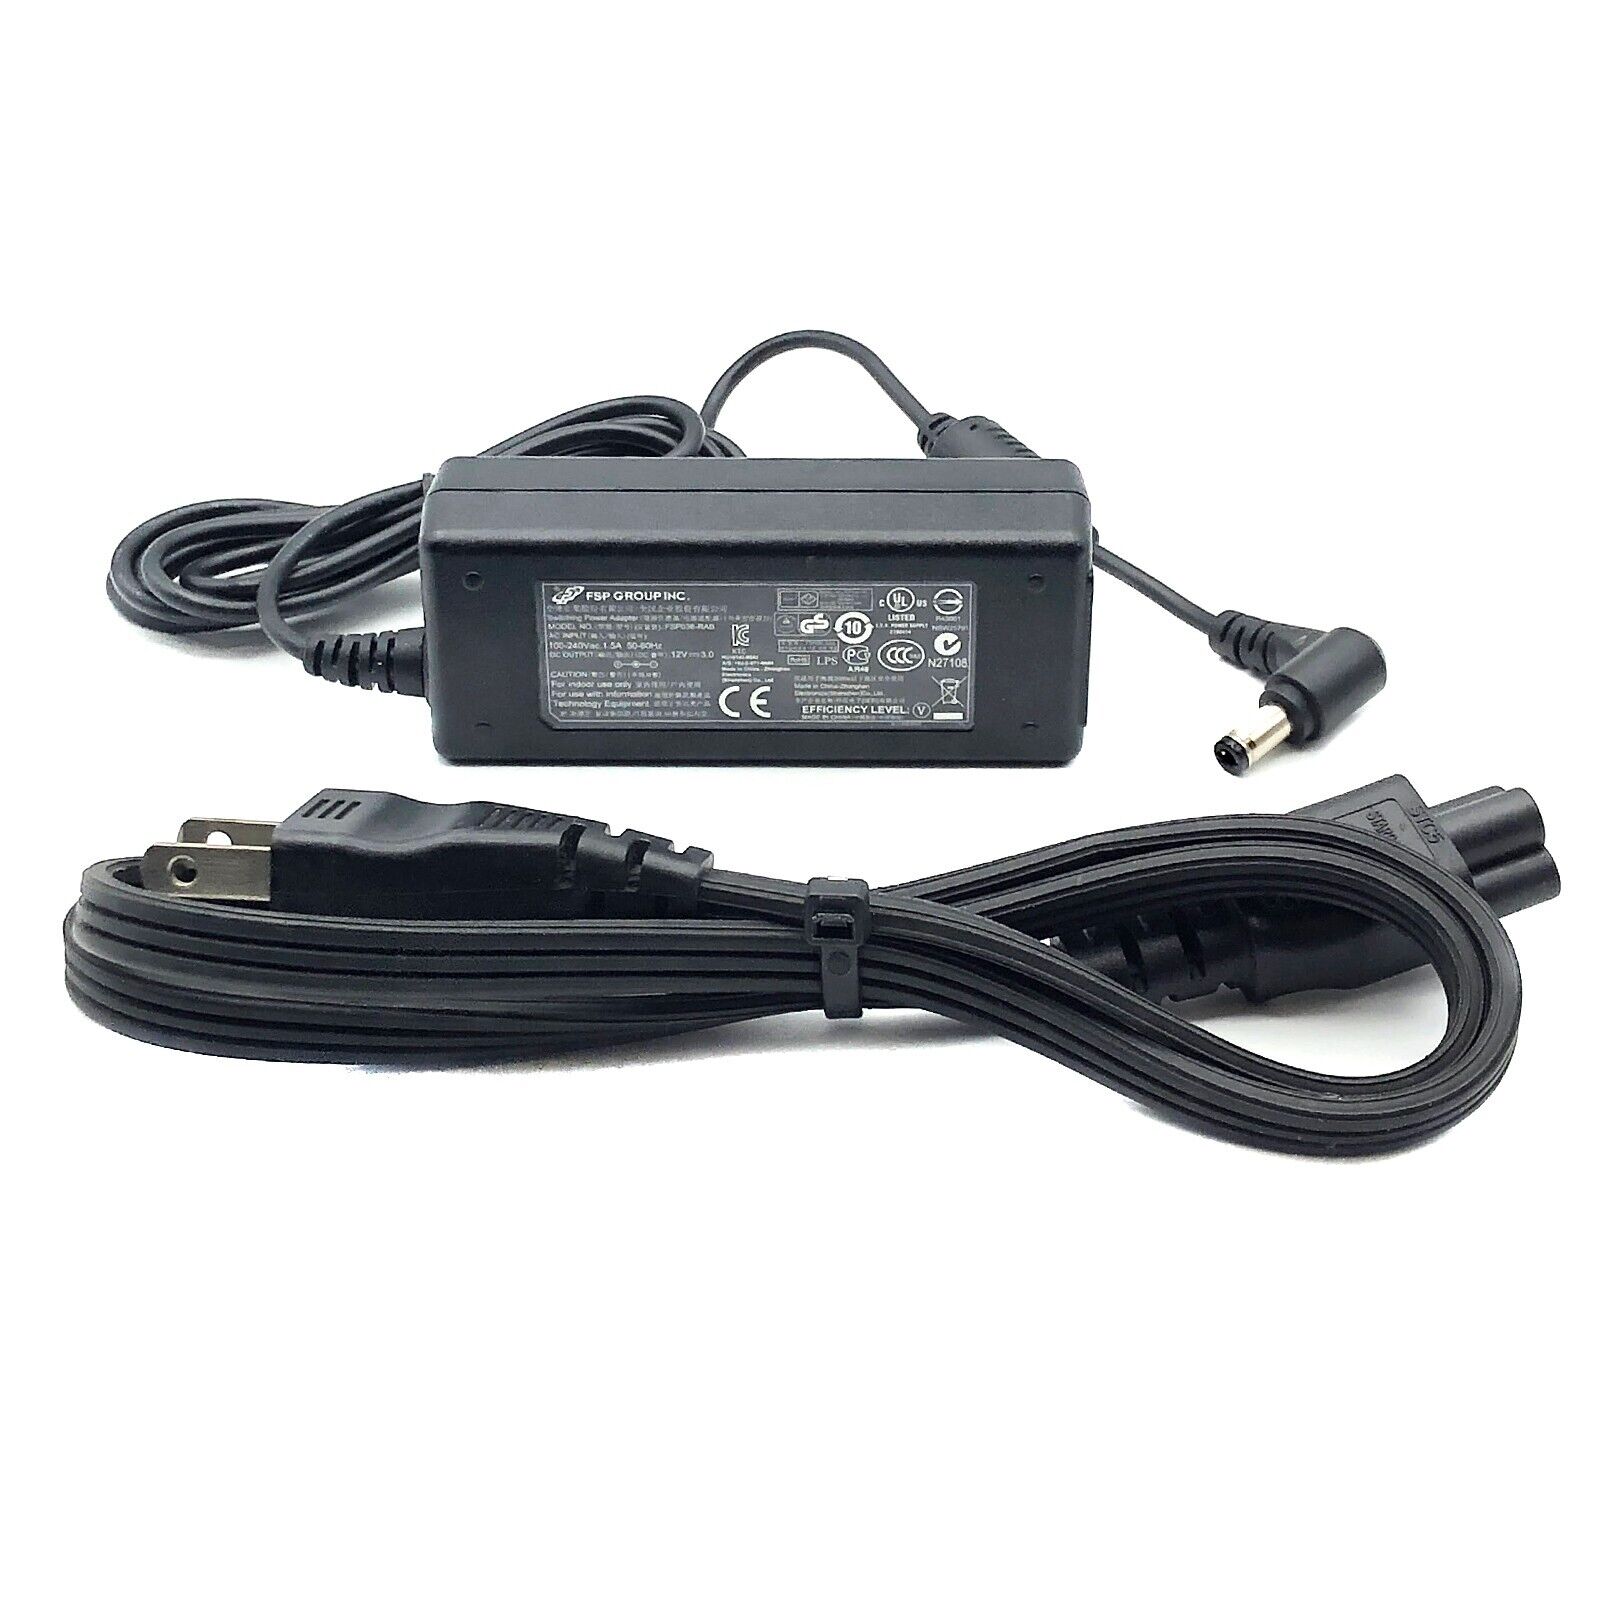 *Brand NEW*Genuine FSP 12V 3A AC Adapter for Lathem 100E Electronic Time Clock POWER Supply